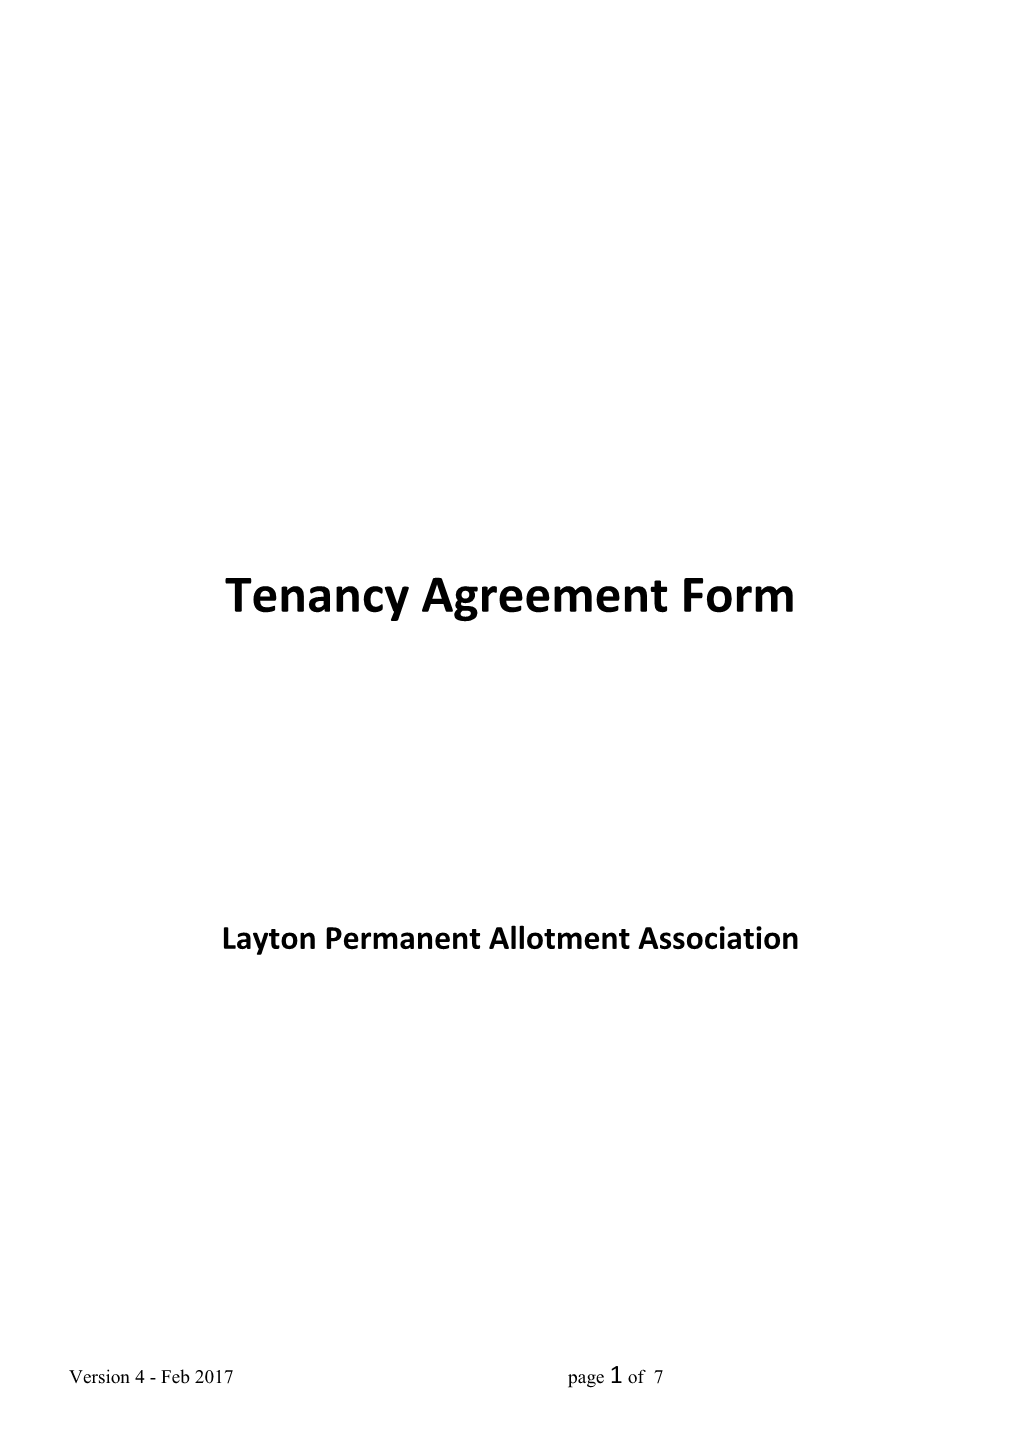 Layton Permanent Allotment Association